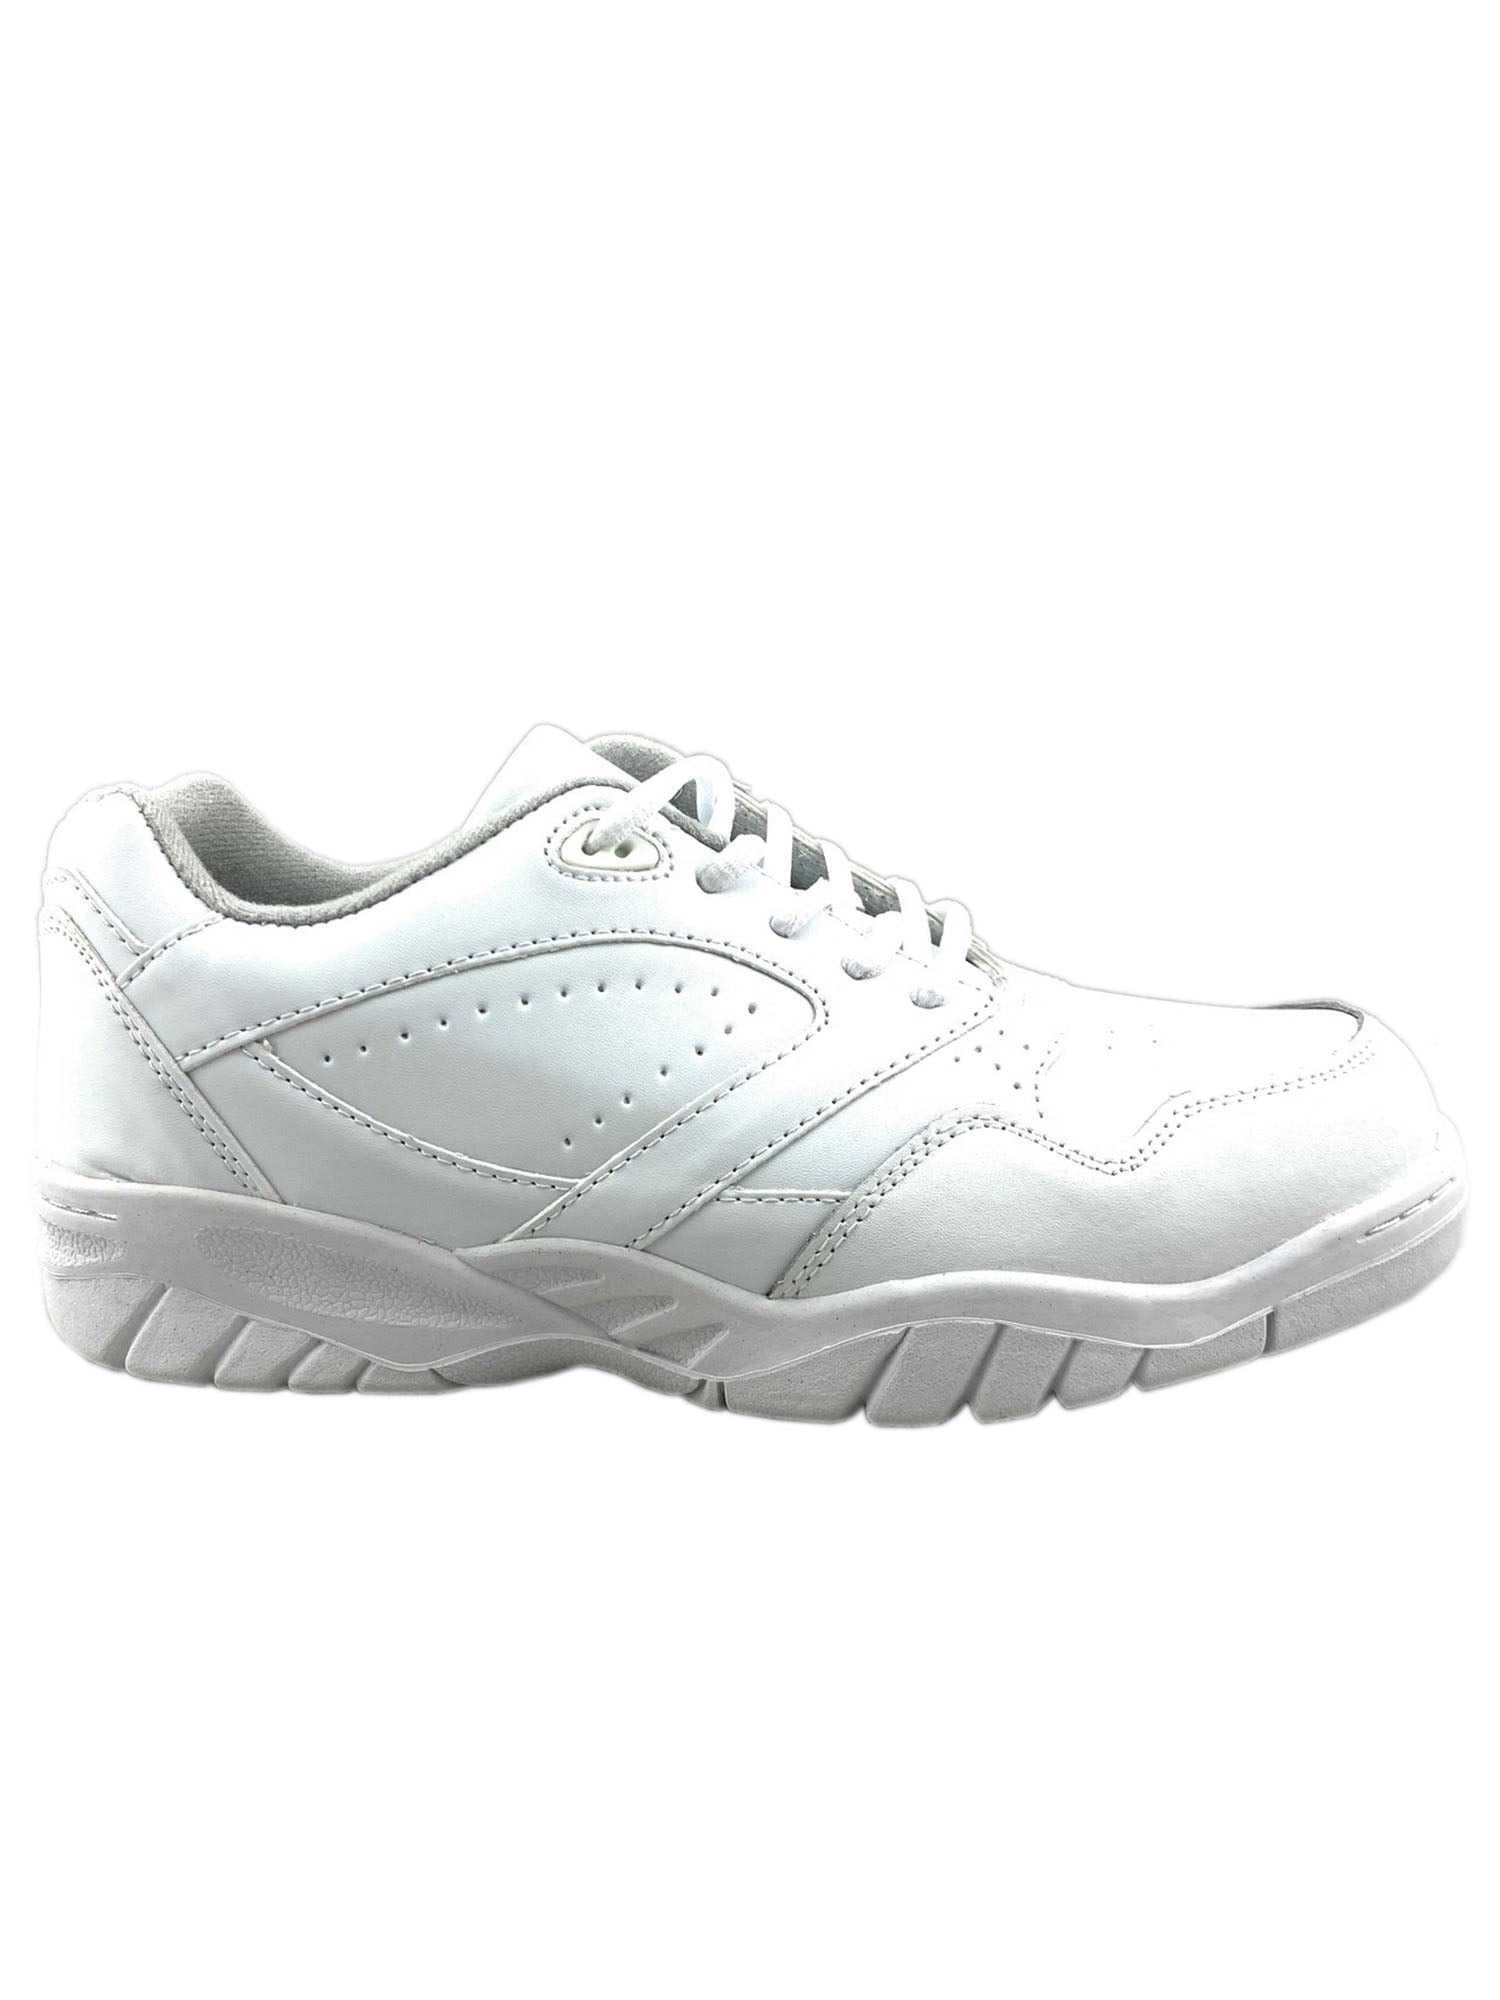 mens white tennis shoes walmart